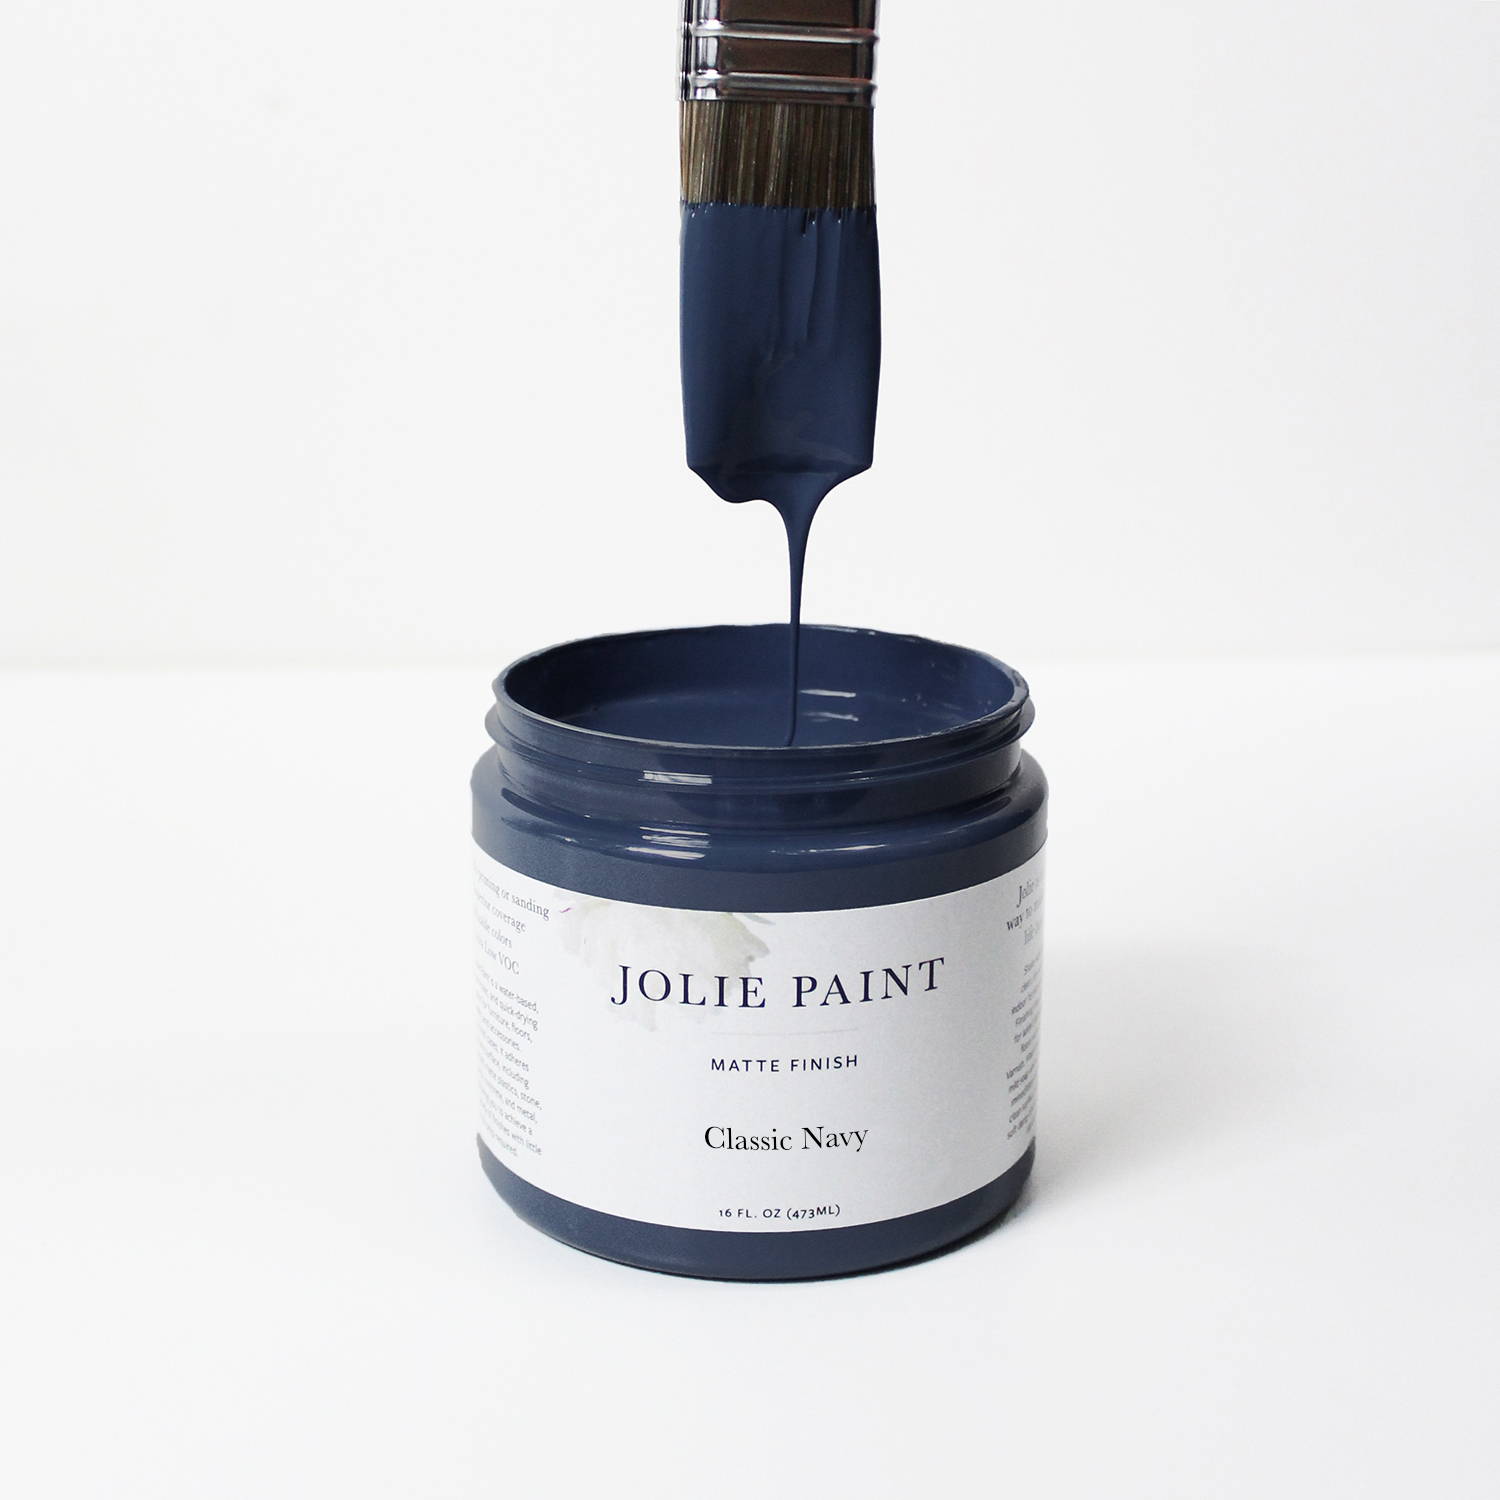 Palace White | Jolie Paint